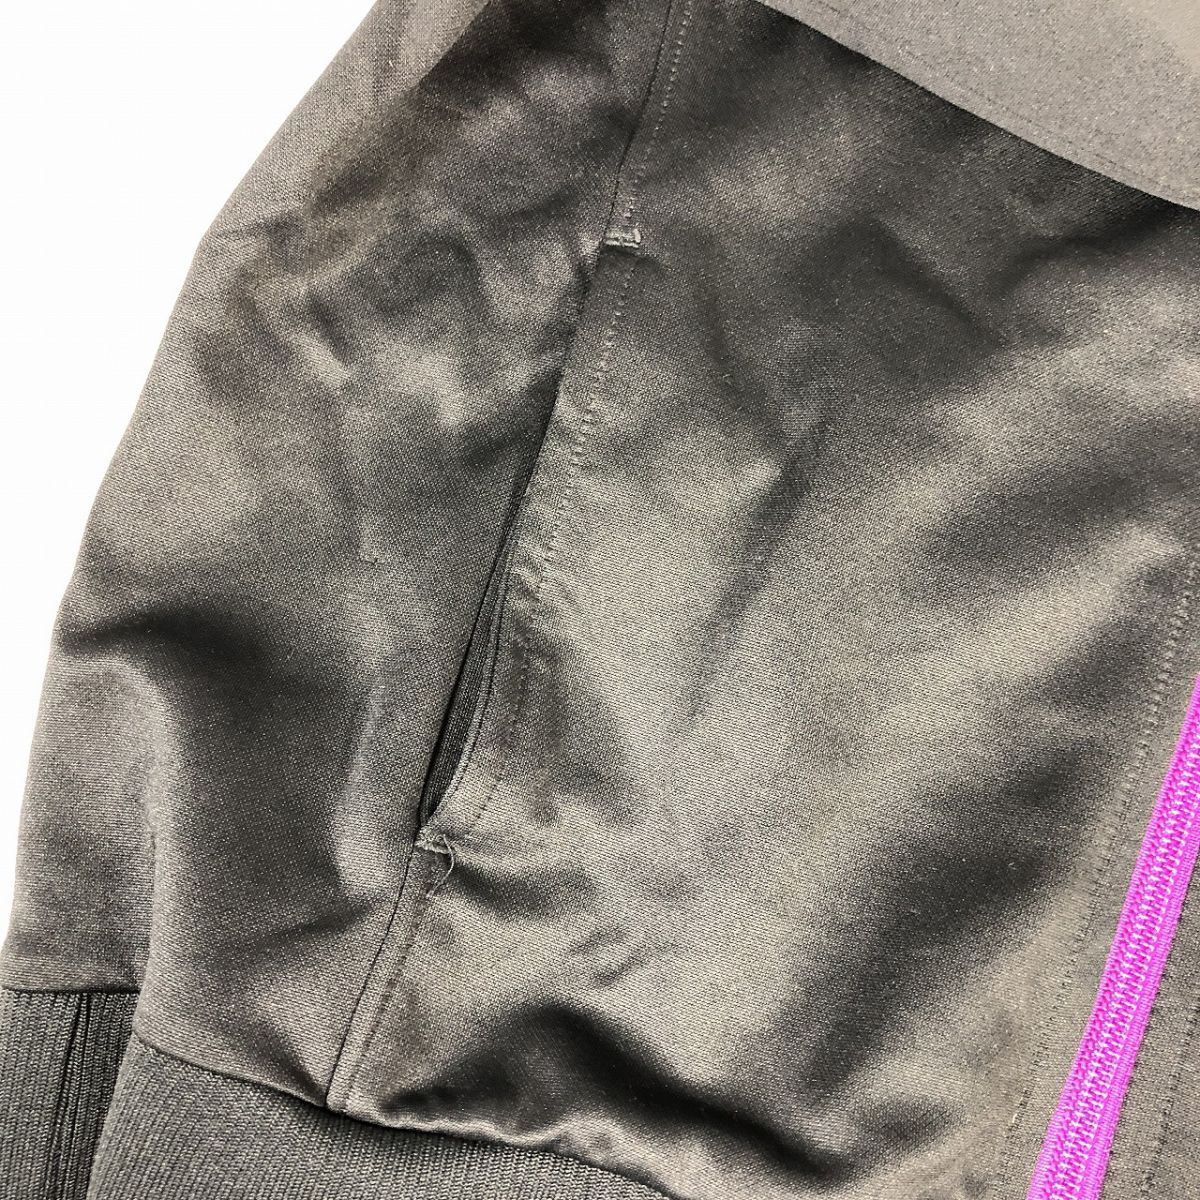  Nike NIKE nylon jersey pants top and bottom men's M black X purple beautiful goods 